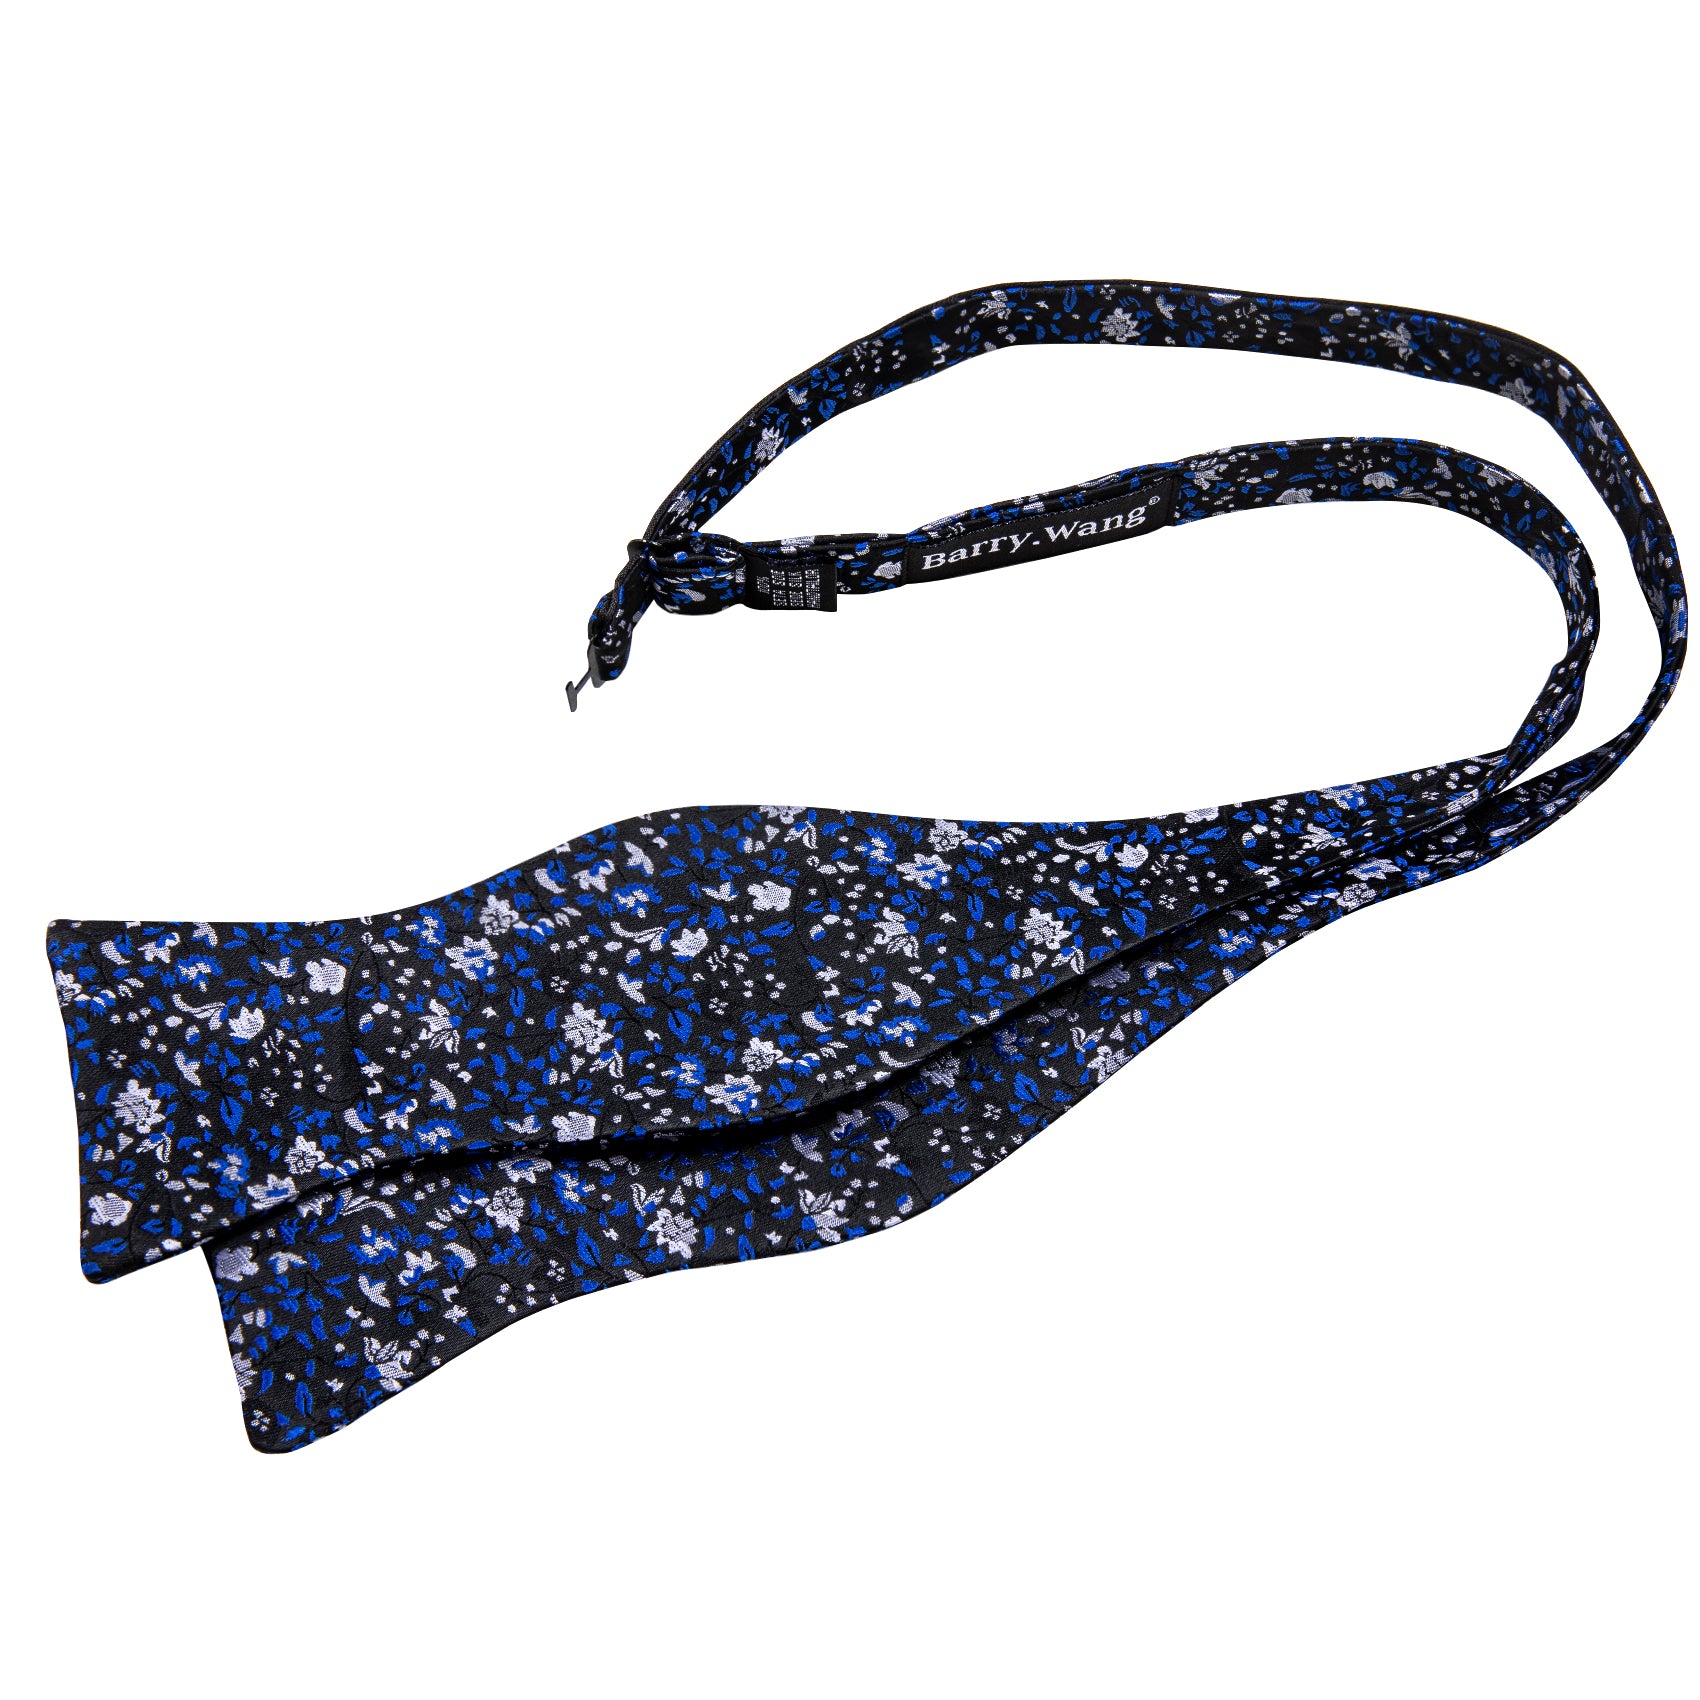 Black Blue Flower Silk Self Tie Bow Tie Hanky Cufflinks Set